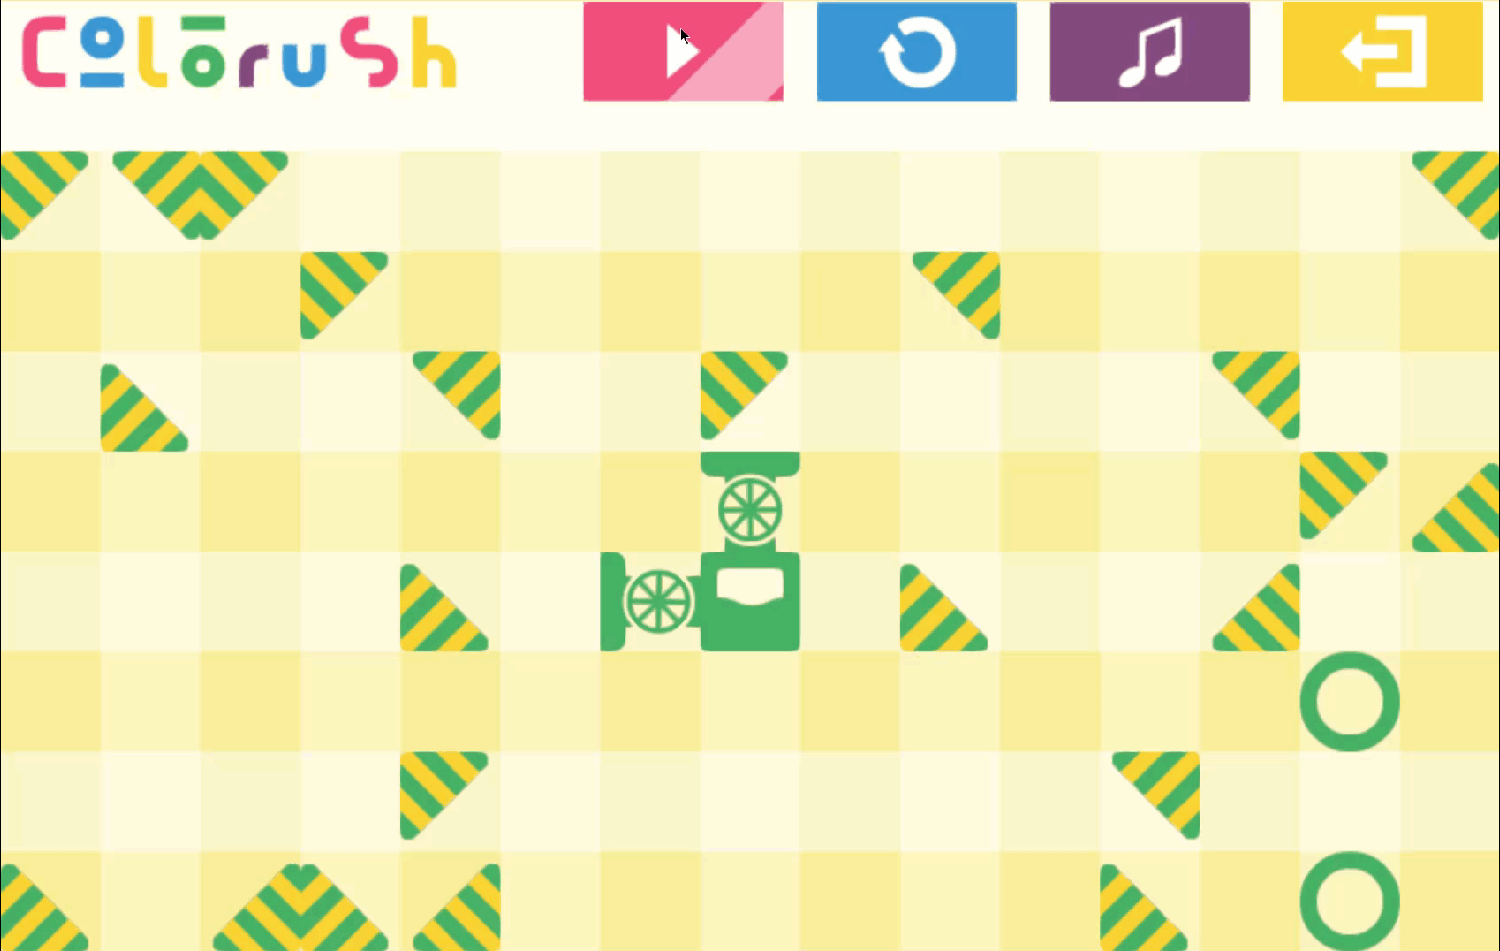 Colorush Game Level 14 Screenshot.